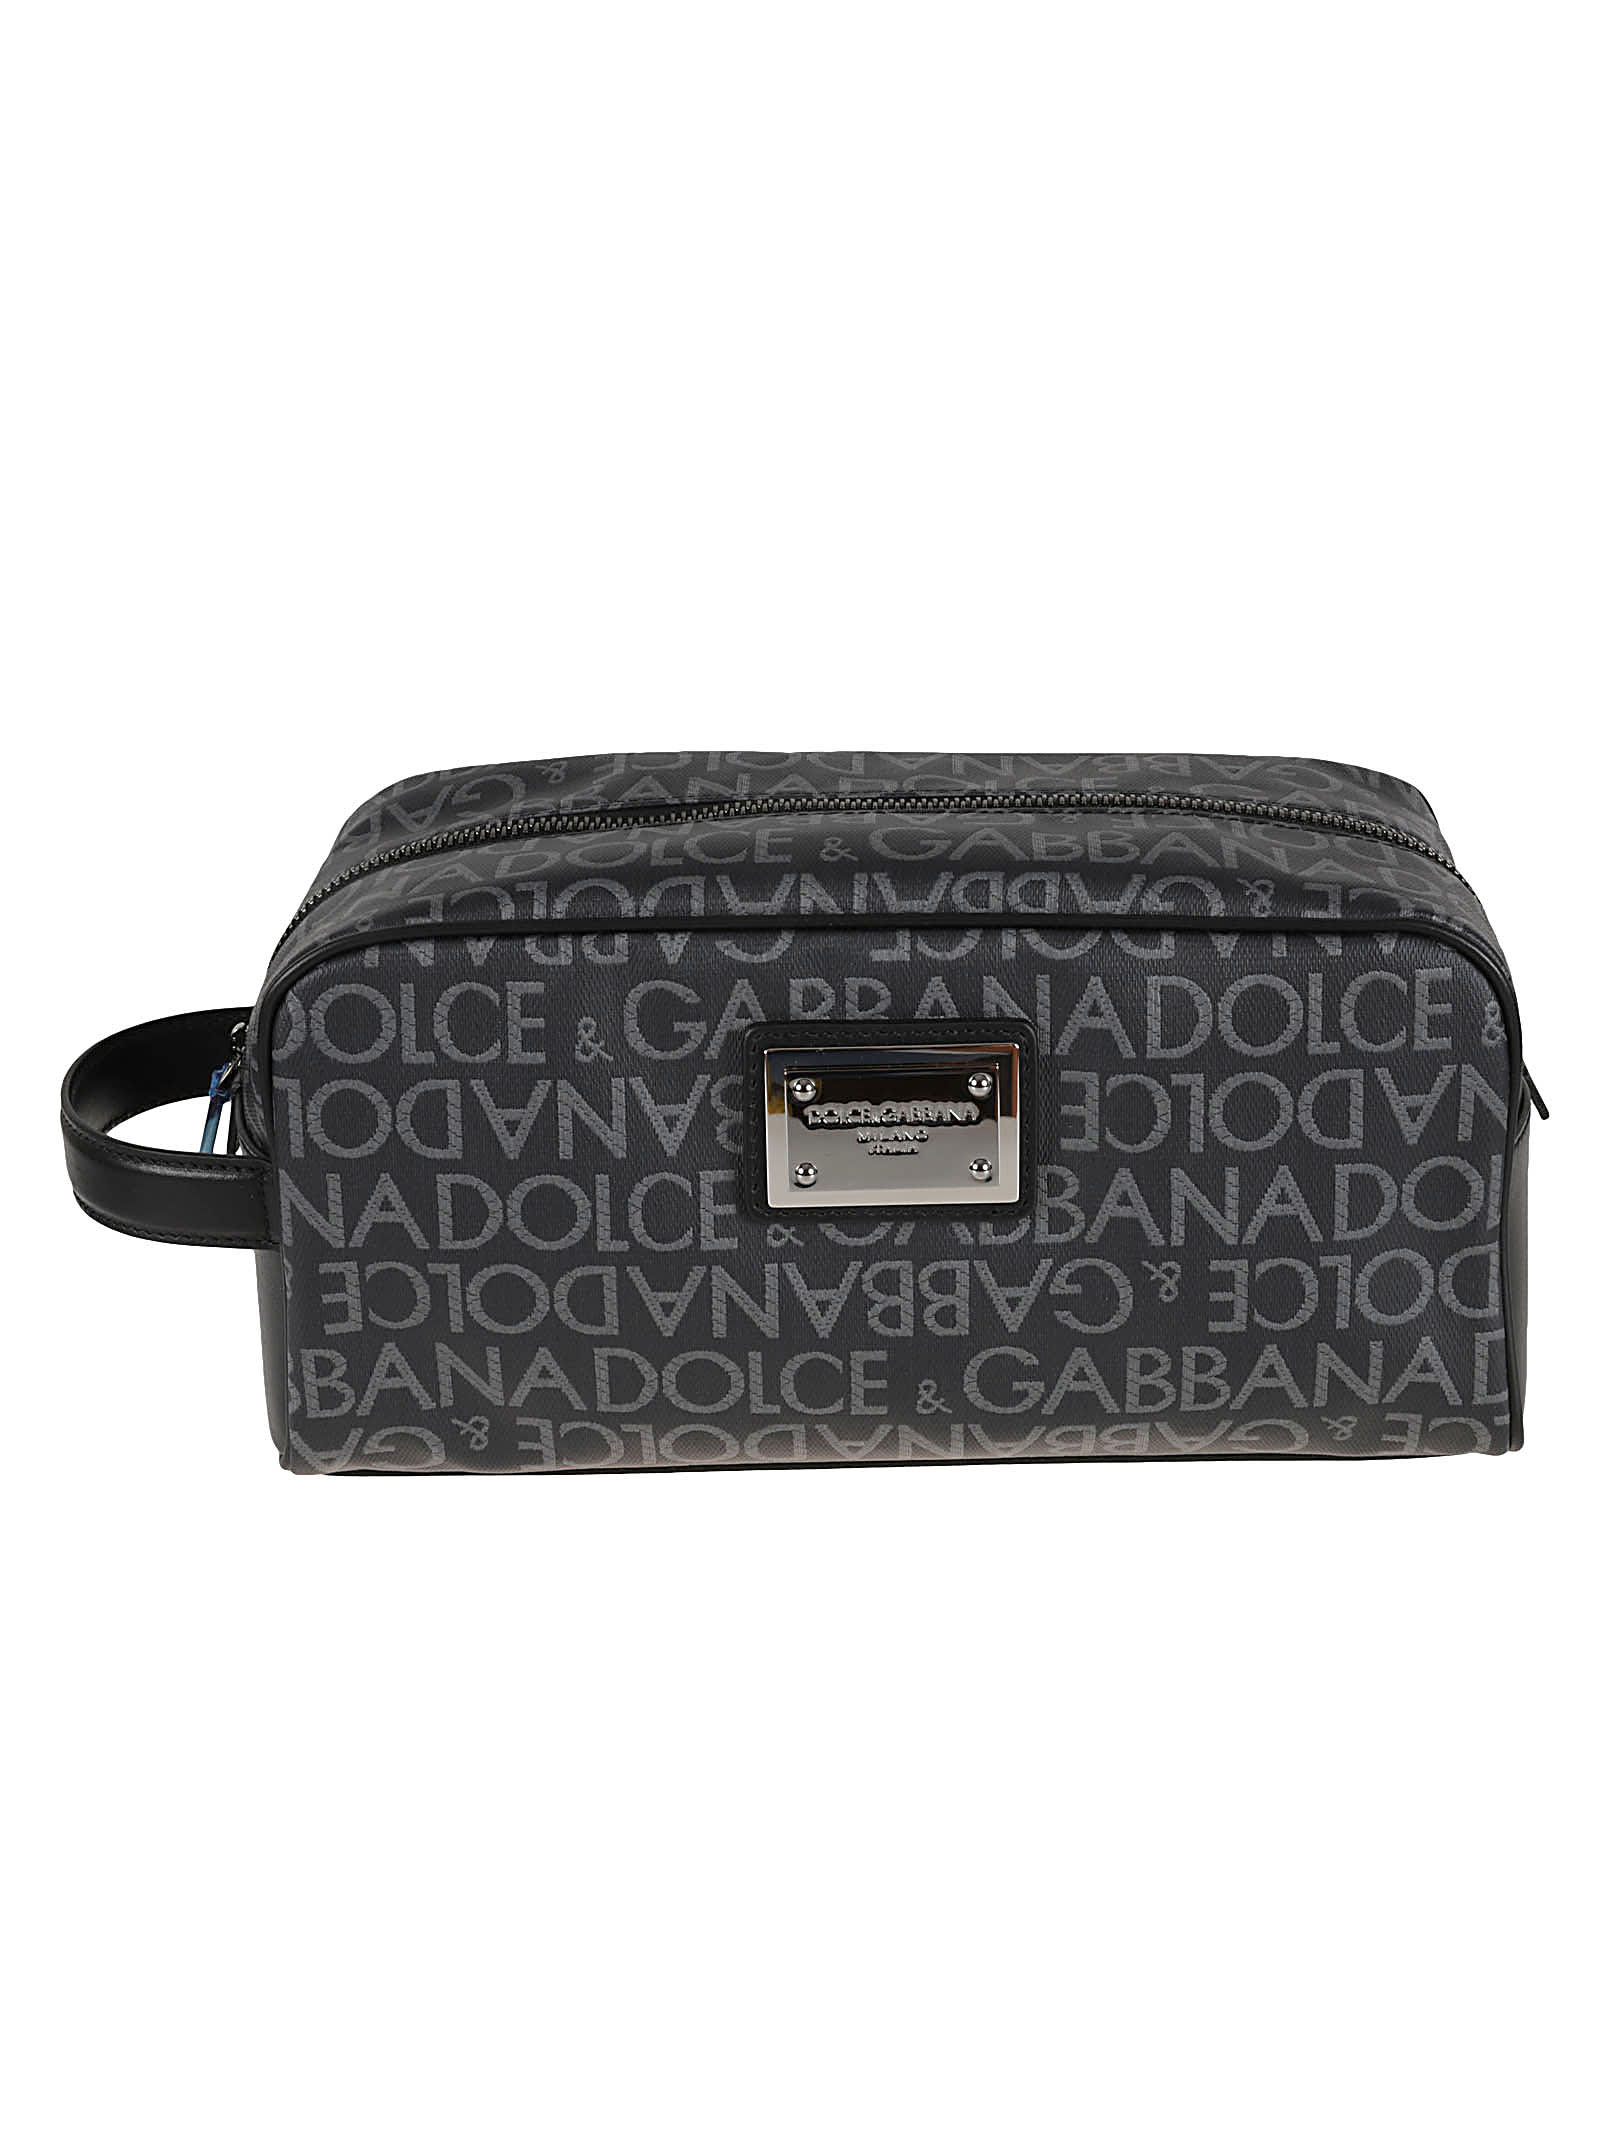 Dolce & Gabbana Logo Plaque Clutch In Black/grey